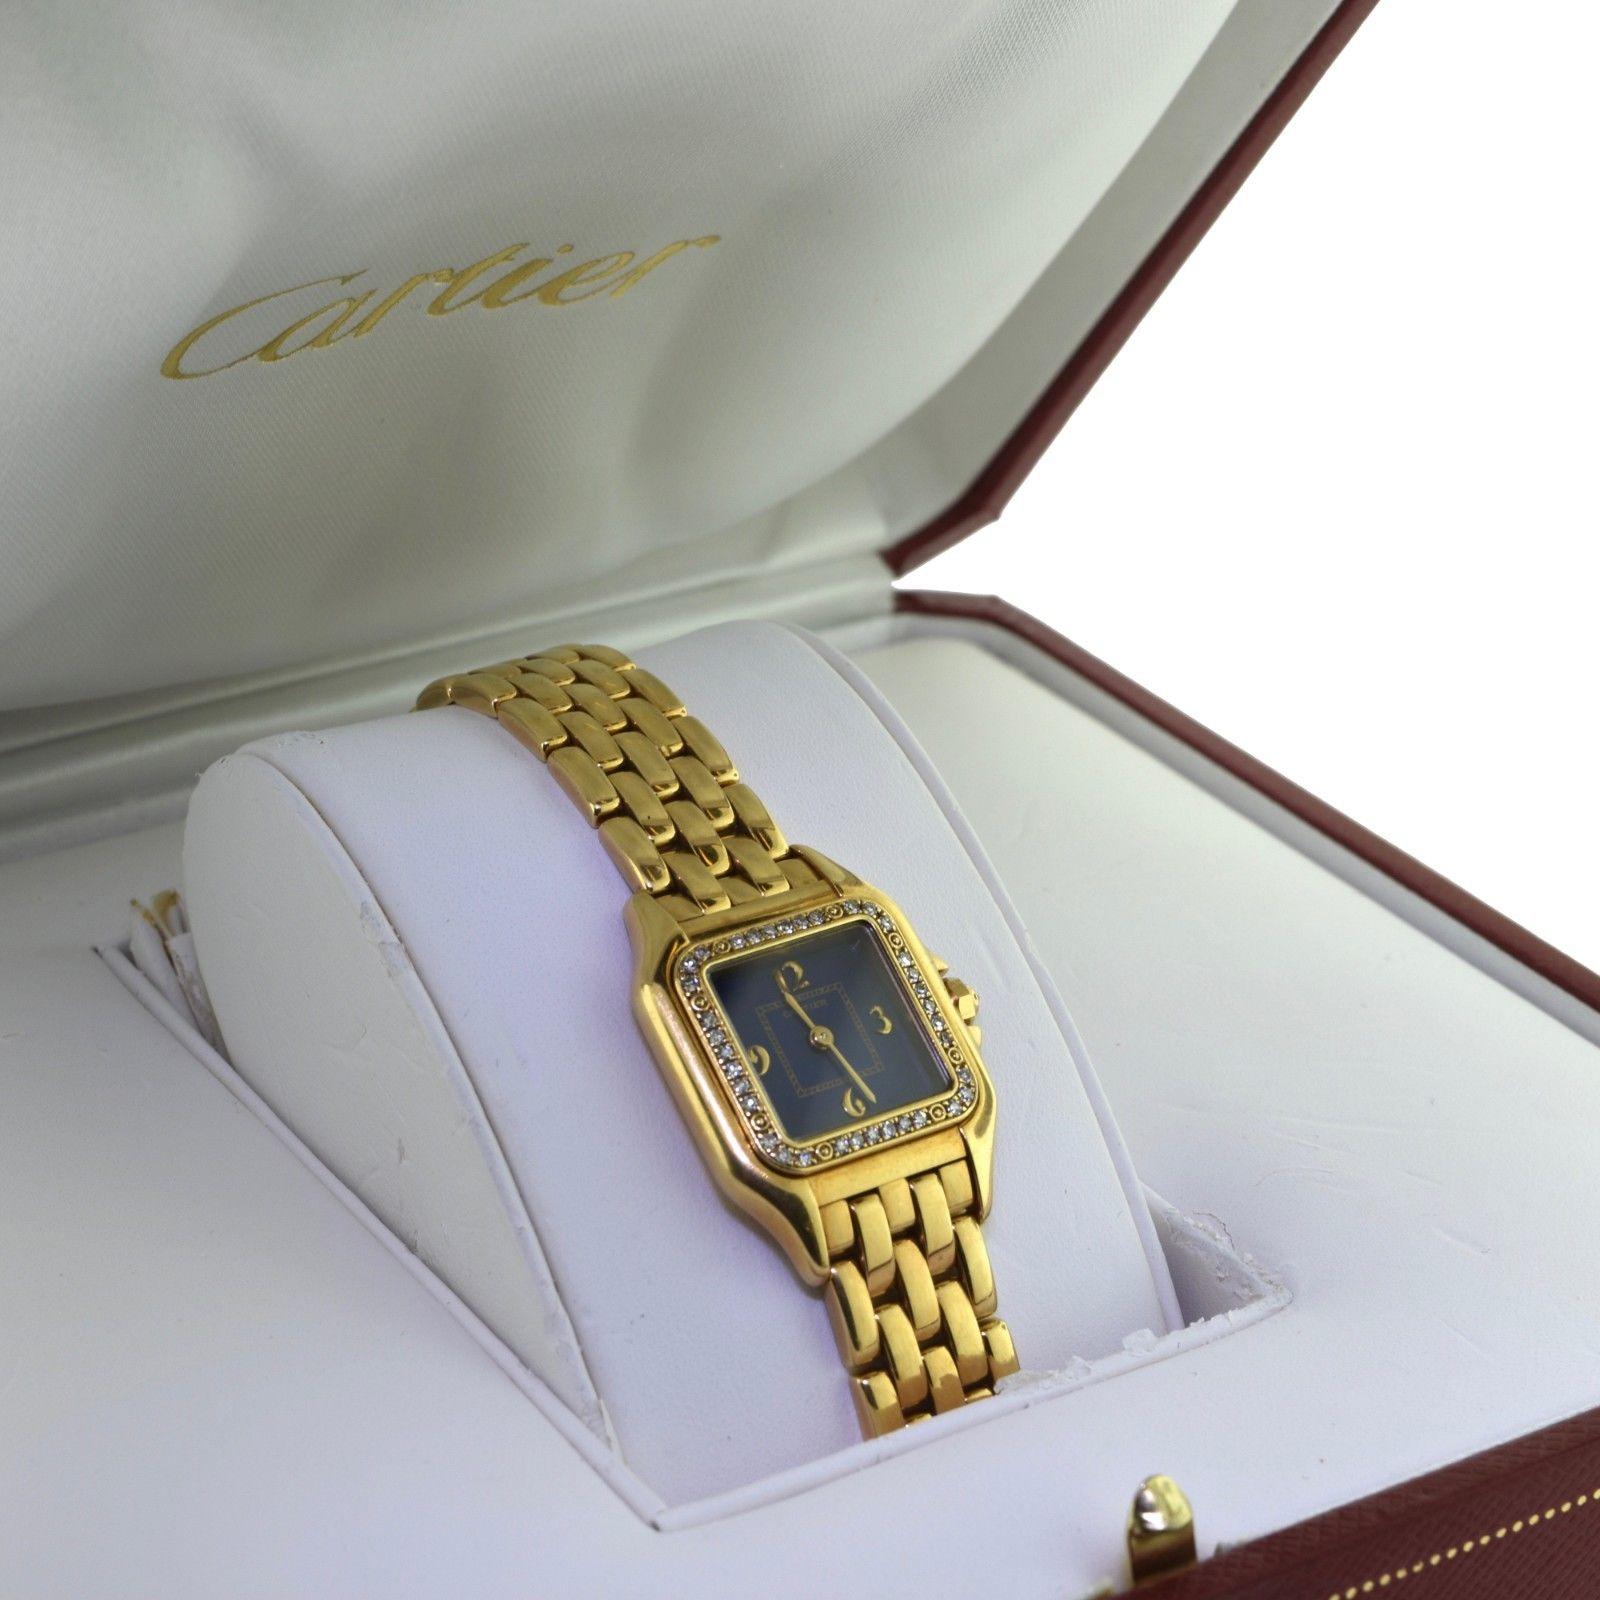 Designer: Cartier

Collection: Panthere

Movement: Quartz

Model Number: 128000 M

Case Material: 18k Yellow Gold

Case Size: 21 mm x 30 mm

Bracelet Material: 18k Yellow Gold

Crystal: Sapphire

Dial: Lapis Lazuli

Bezel: Diamonds 

Origin: